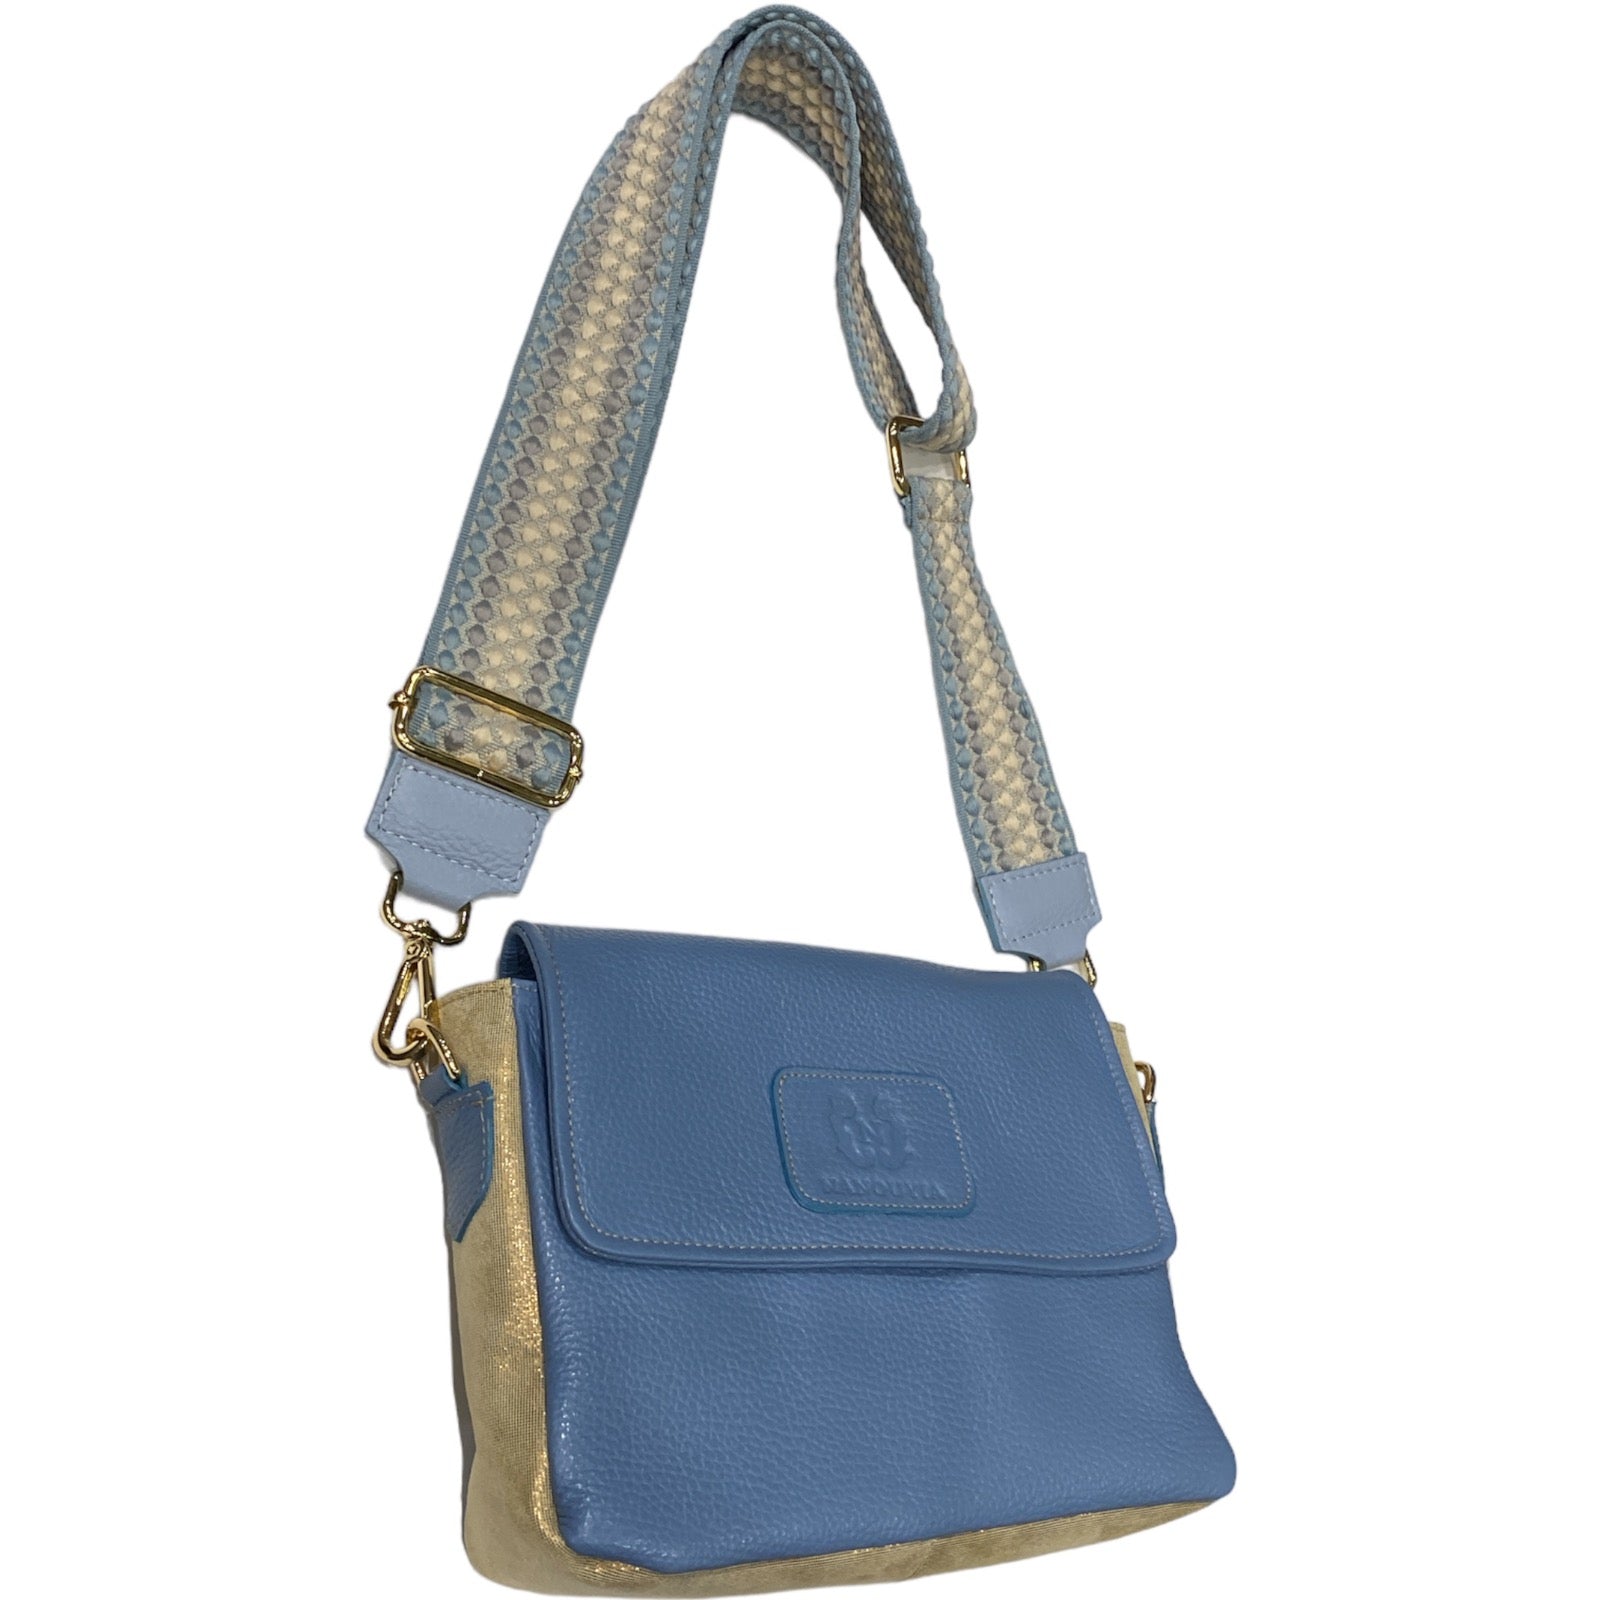 Mandy small. Raf blue leather limited edition bag